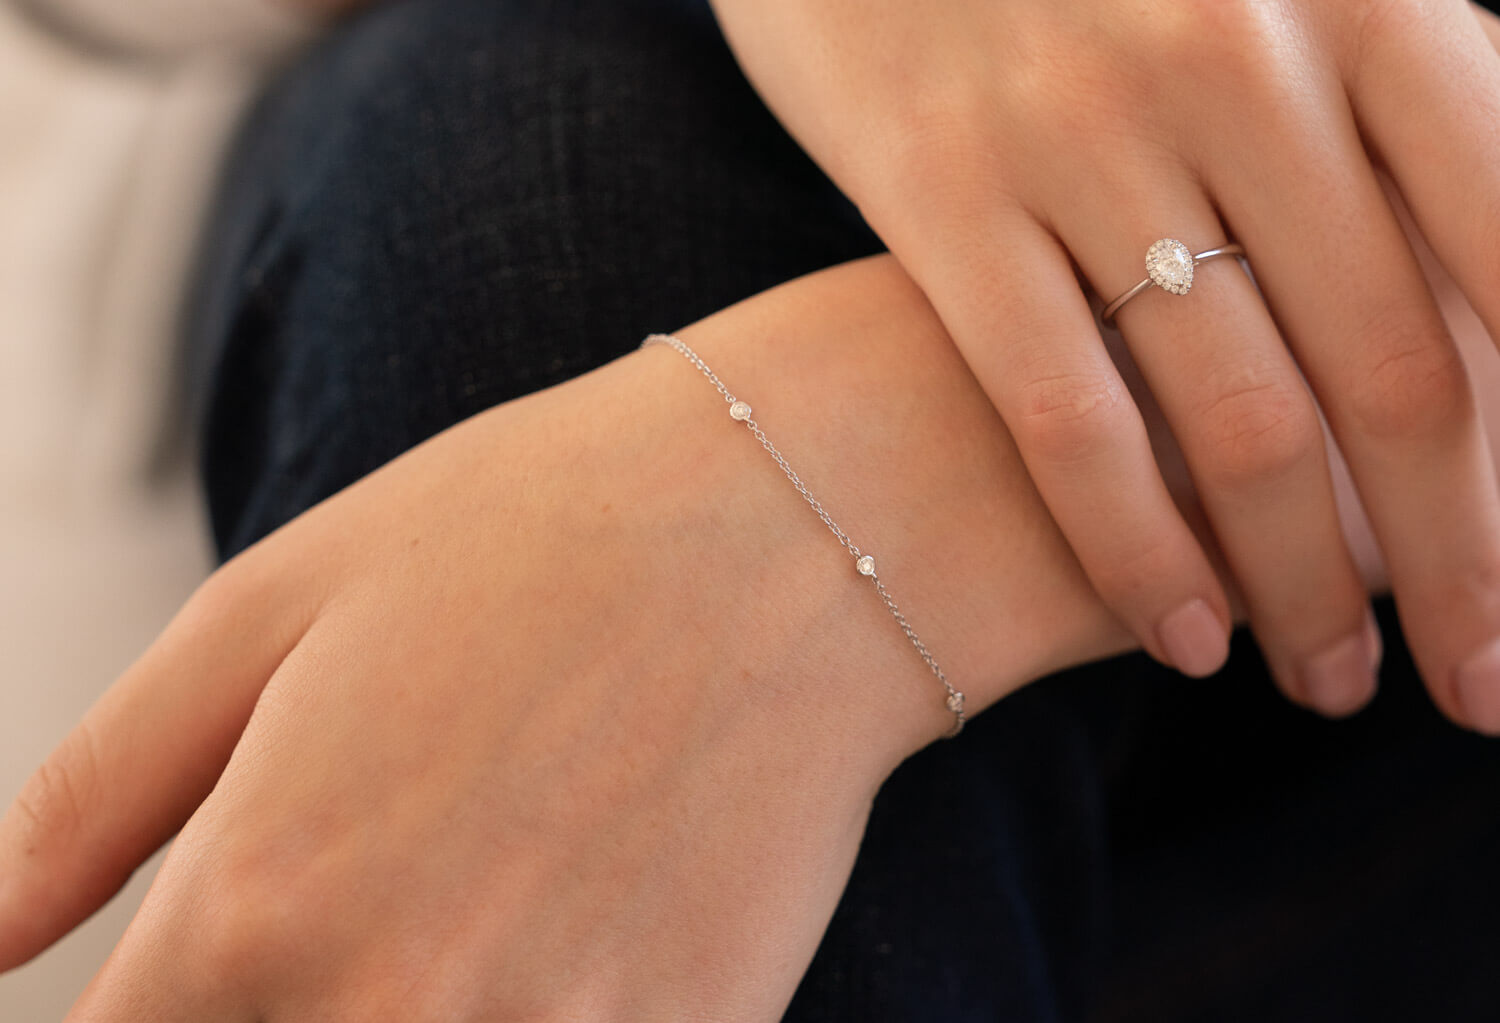 Tiffany Solitaire Diamond Bracelet